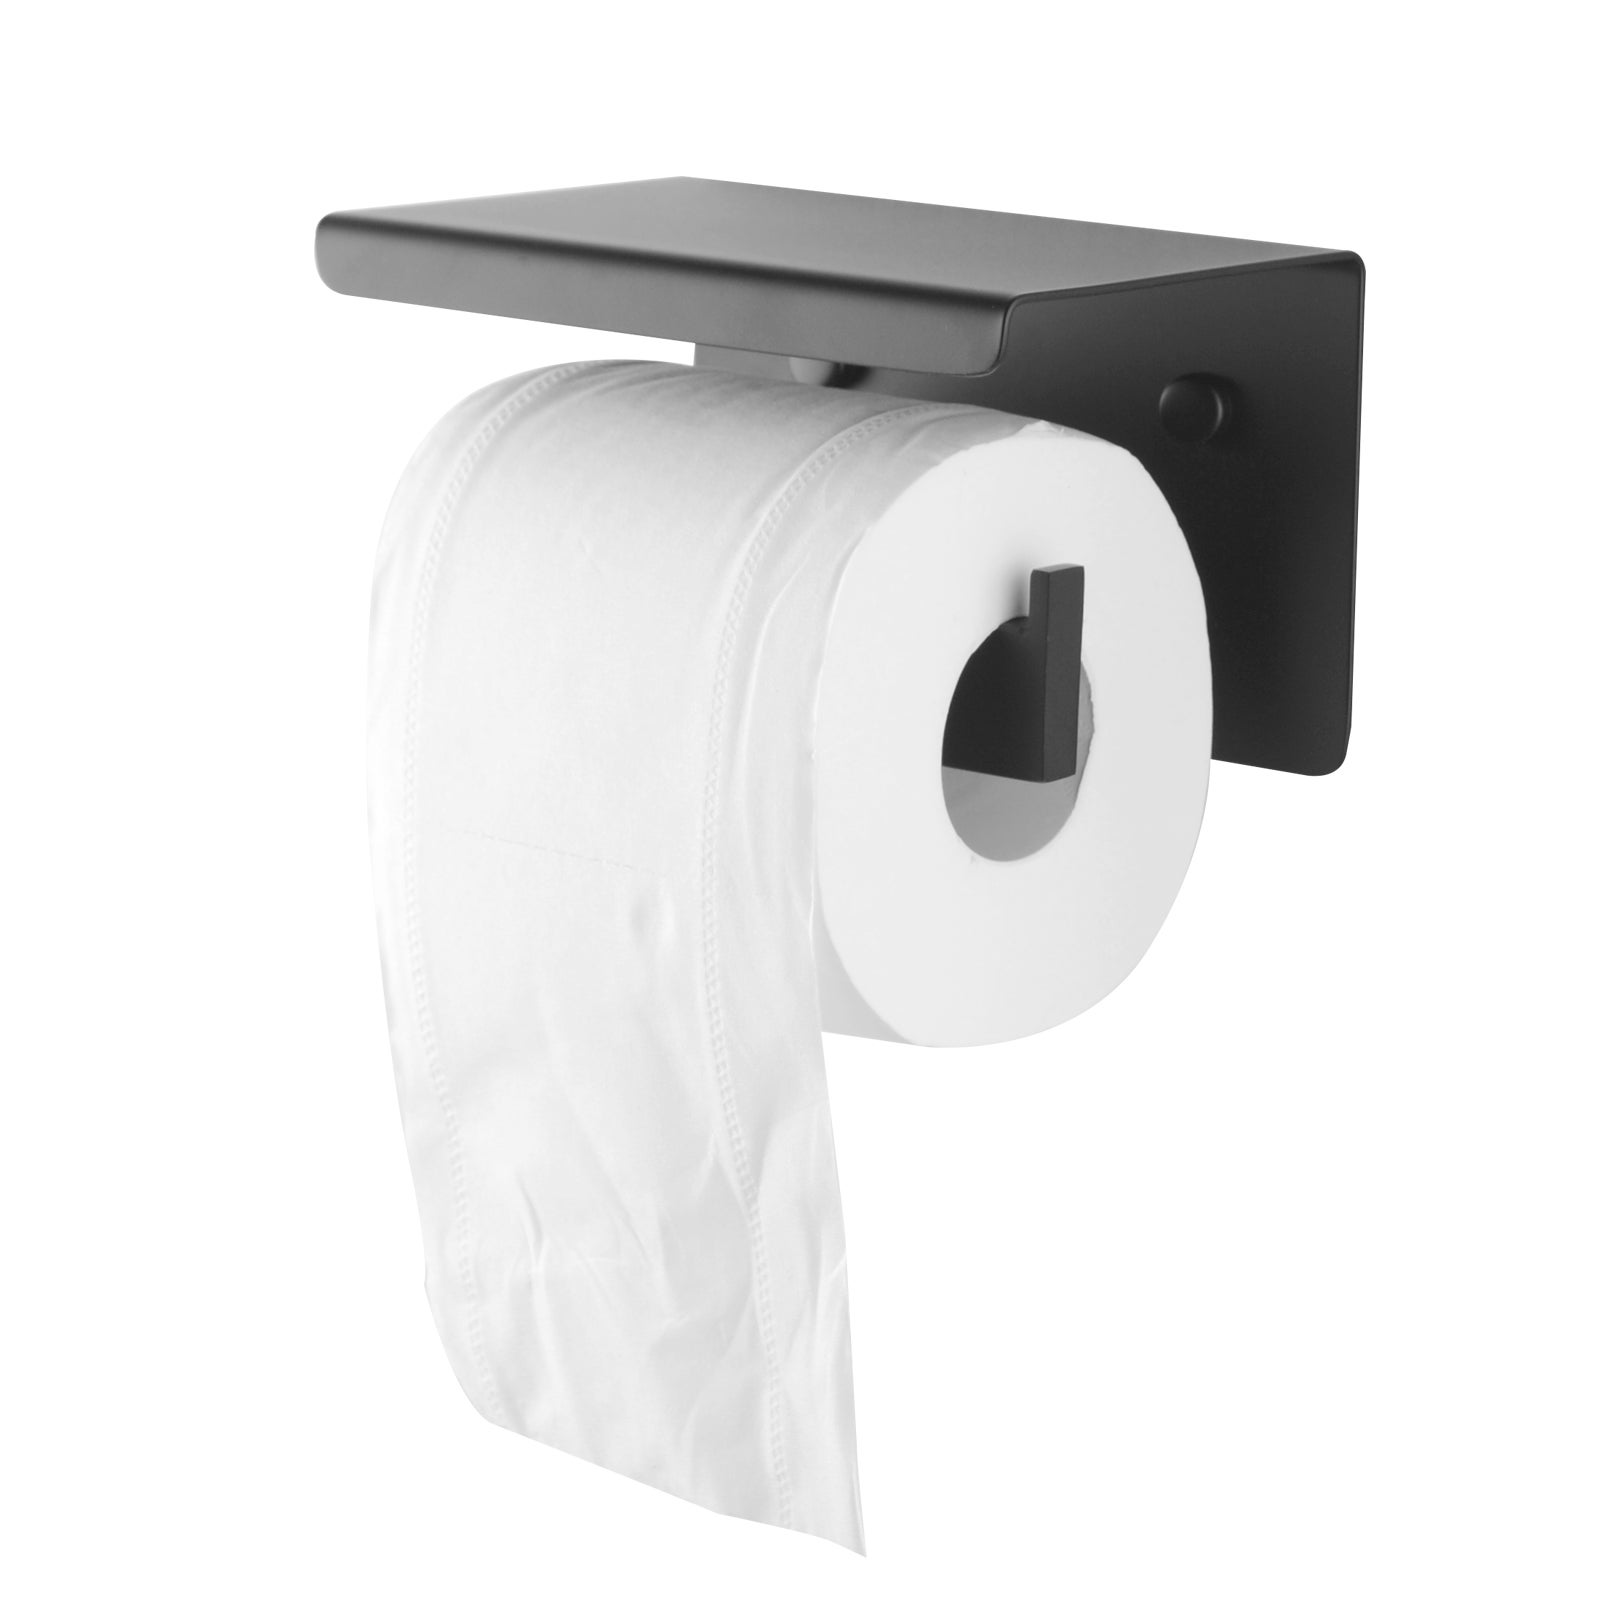 ACA Black Toilet Paper Holder with Phone Shelf Bathroom Accessories Tissue Roll Dispenser